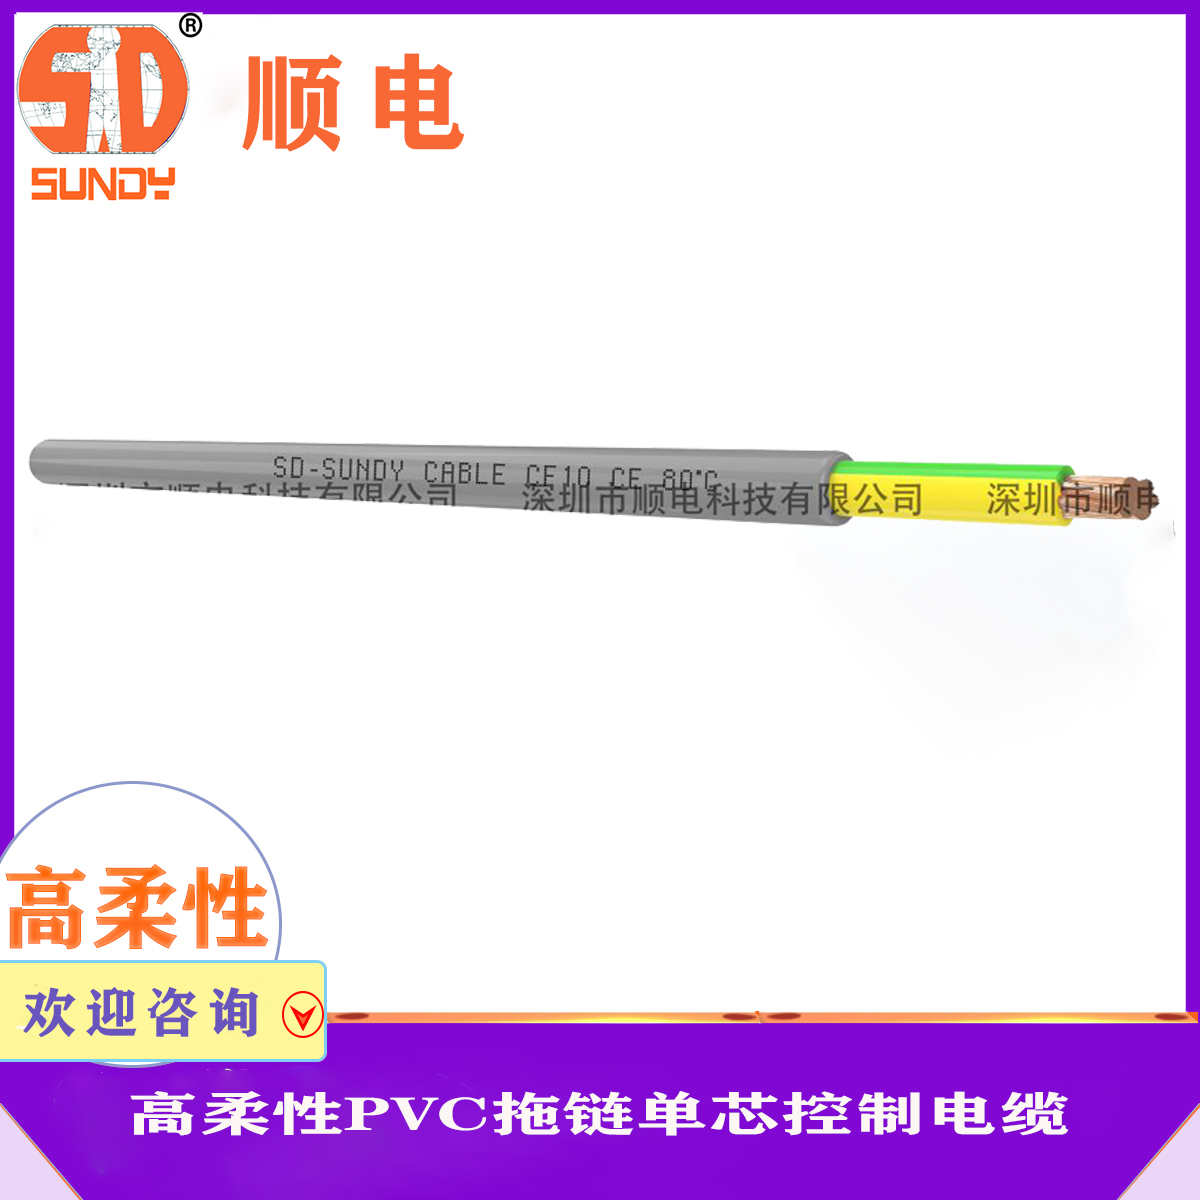 PVC、PUR柔性电缆外护套材料的区别